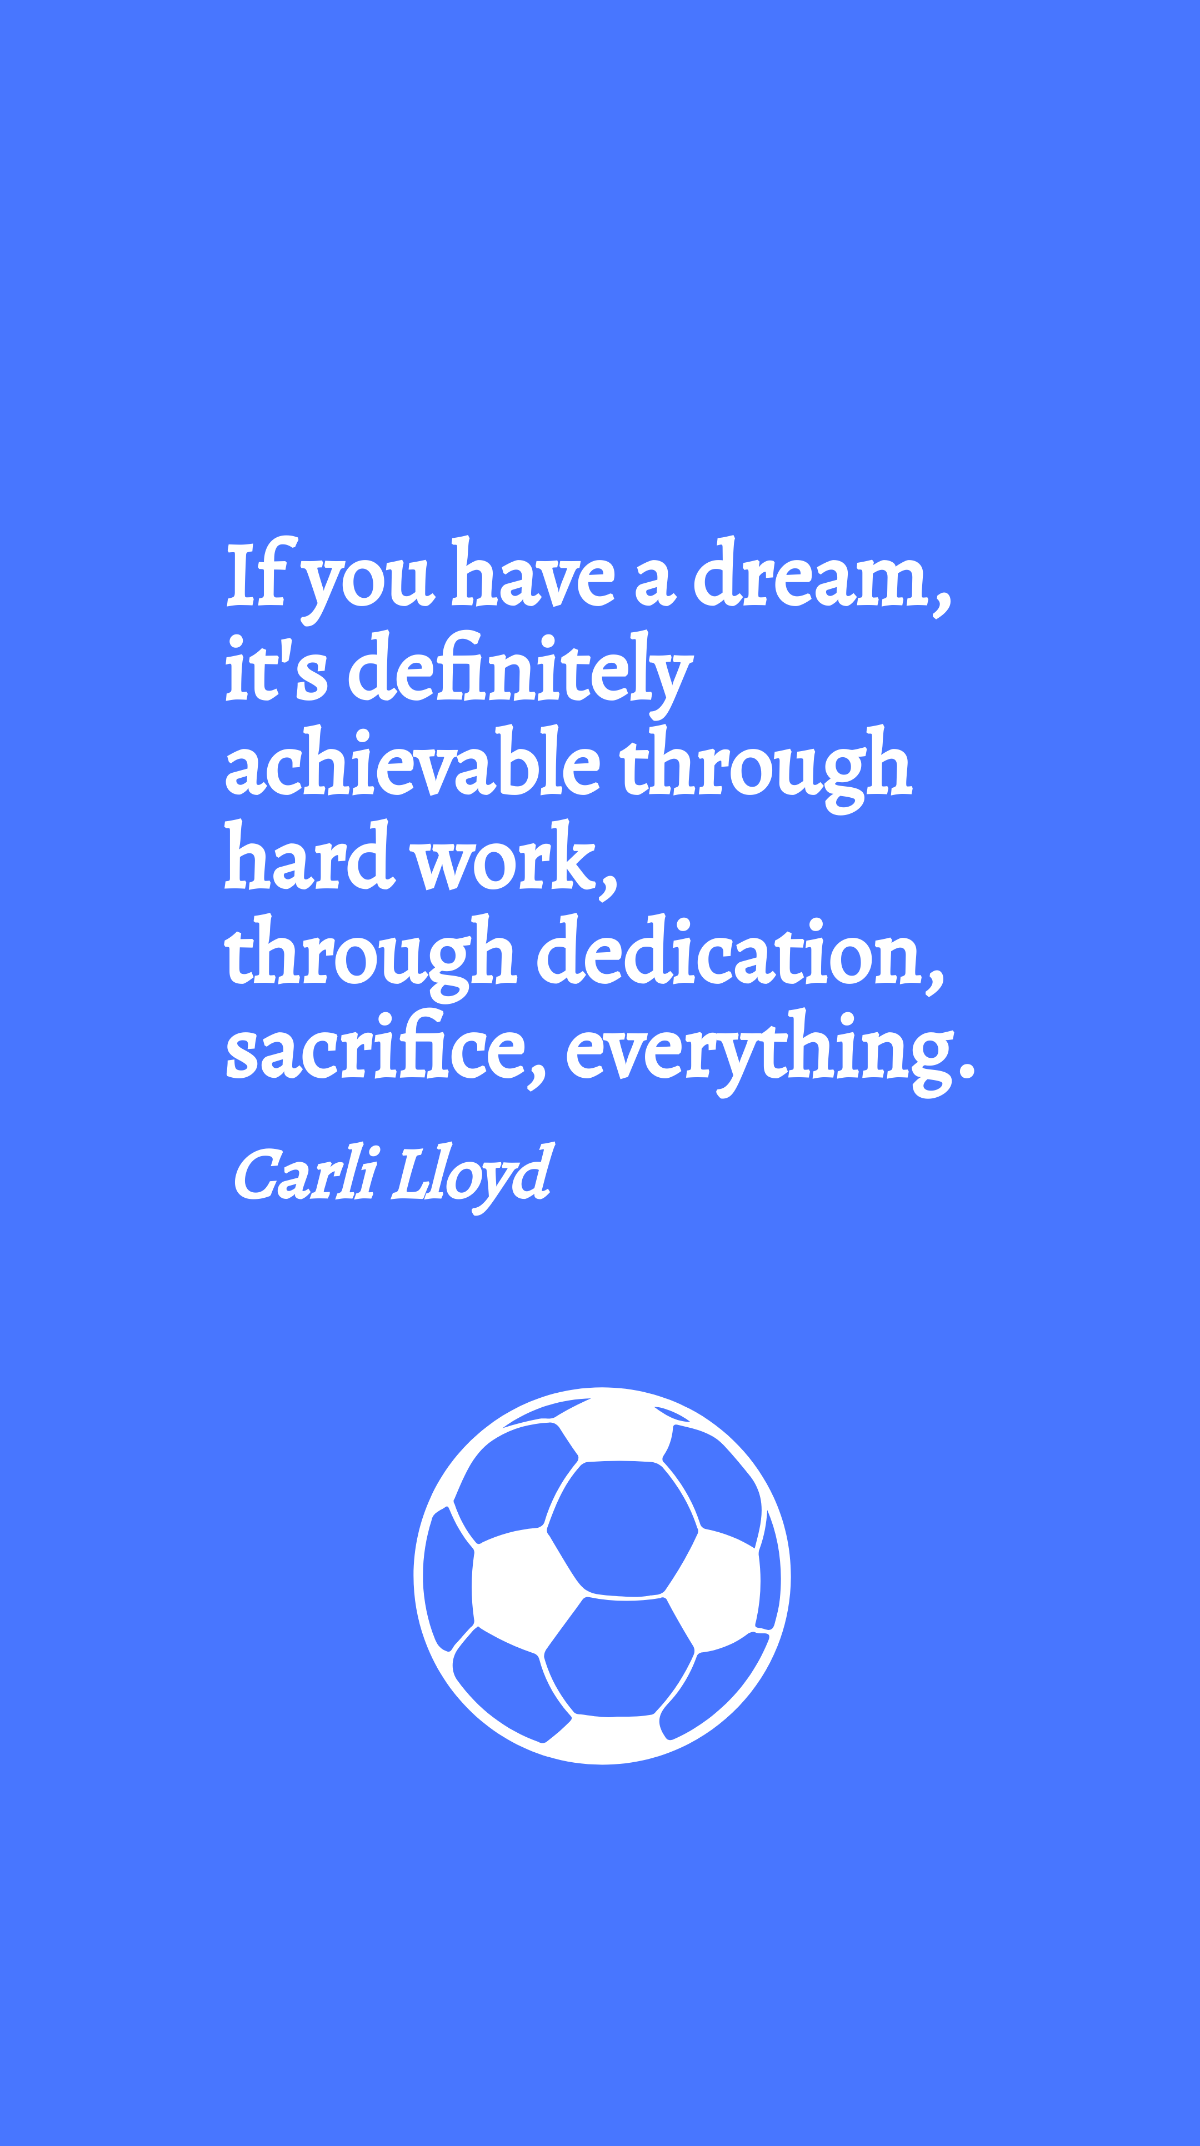 Carli Lloyd - If you have a dream, it's definitely achievable through hard work, through dedication, sacrifice, everything. Template